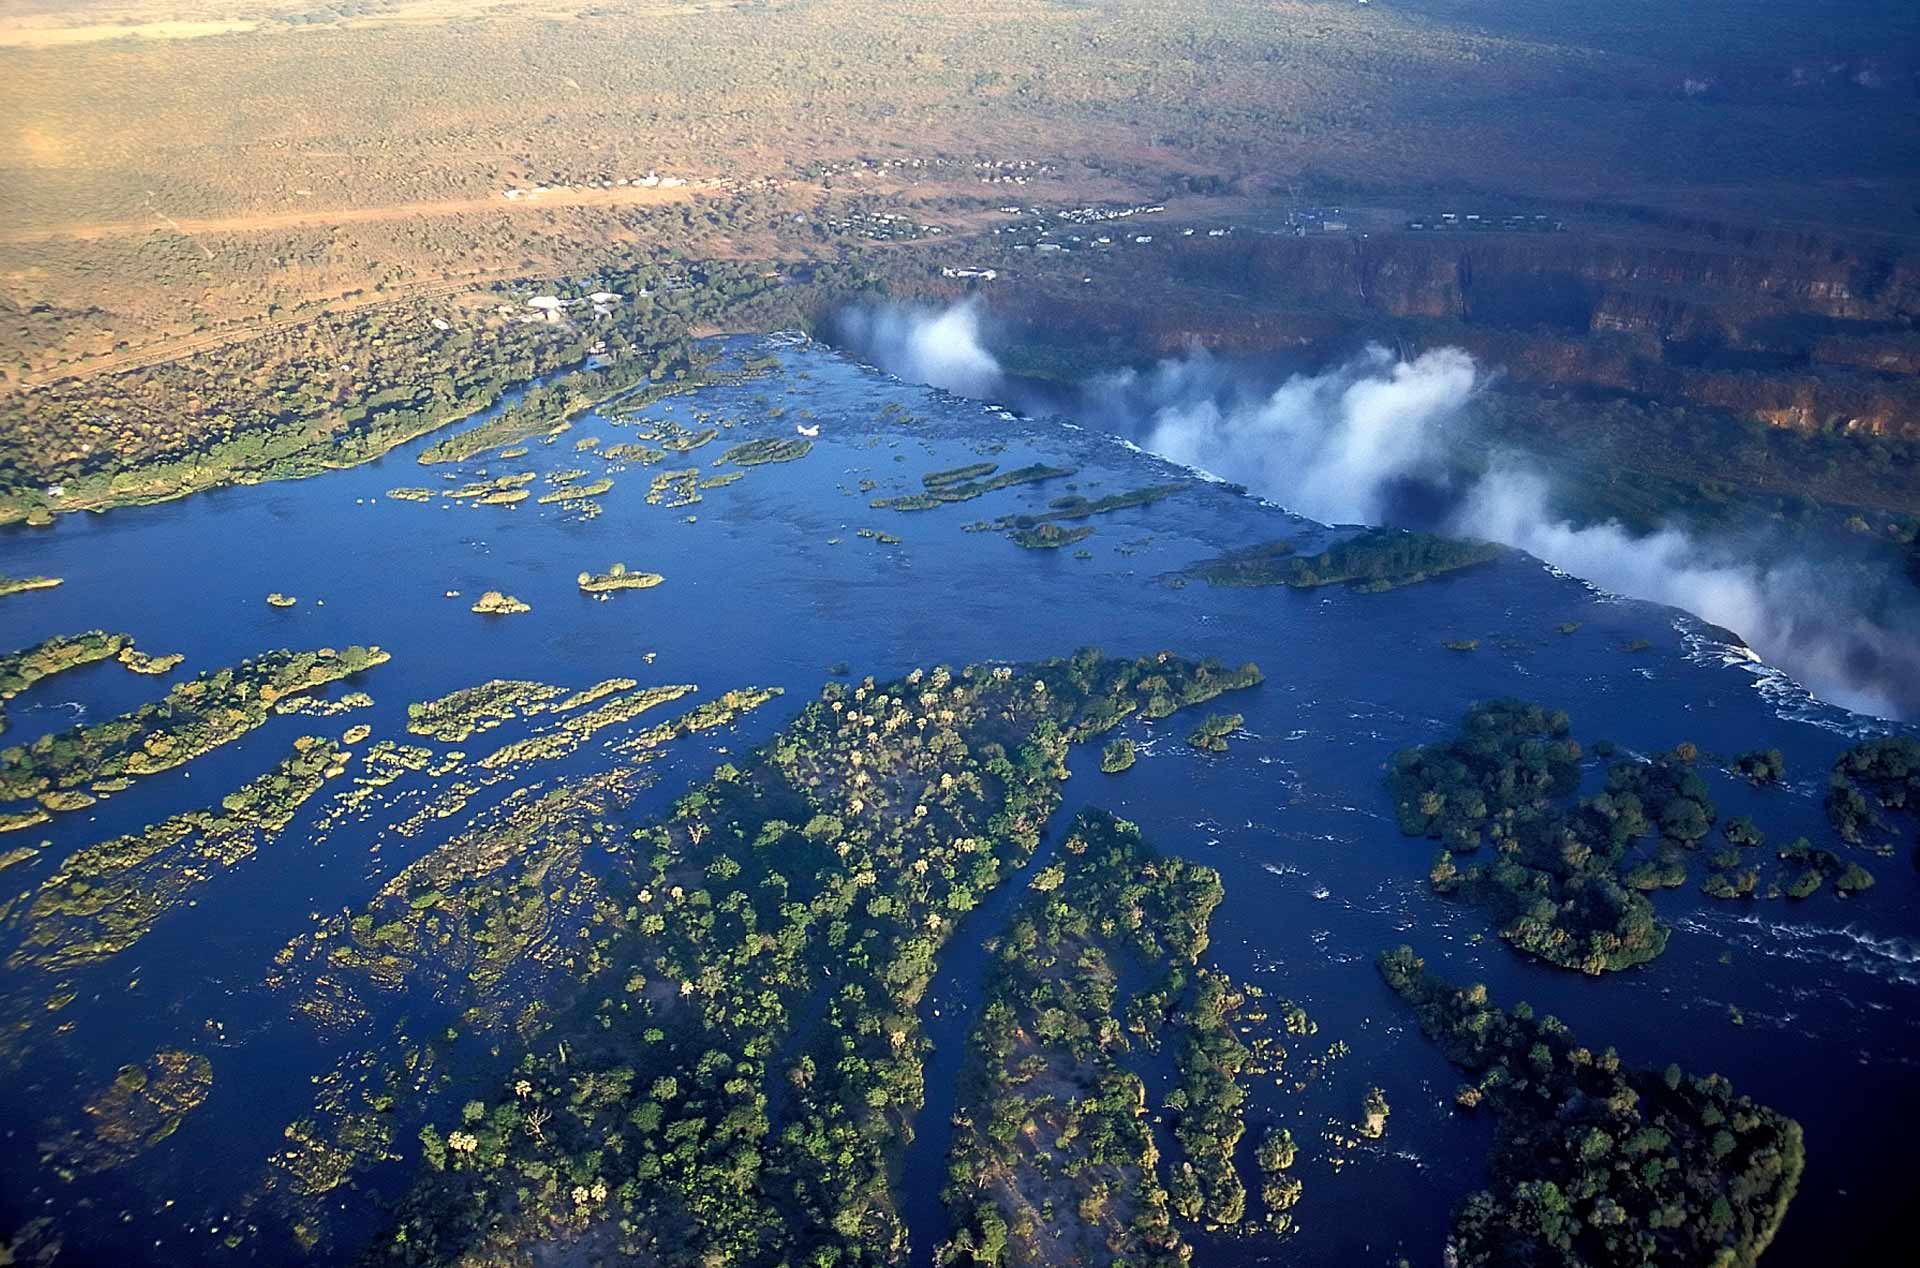 Aerial view of the Zambezi river